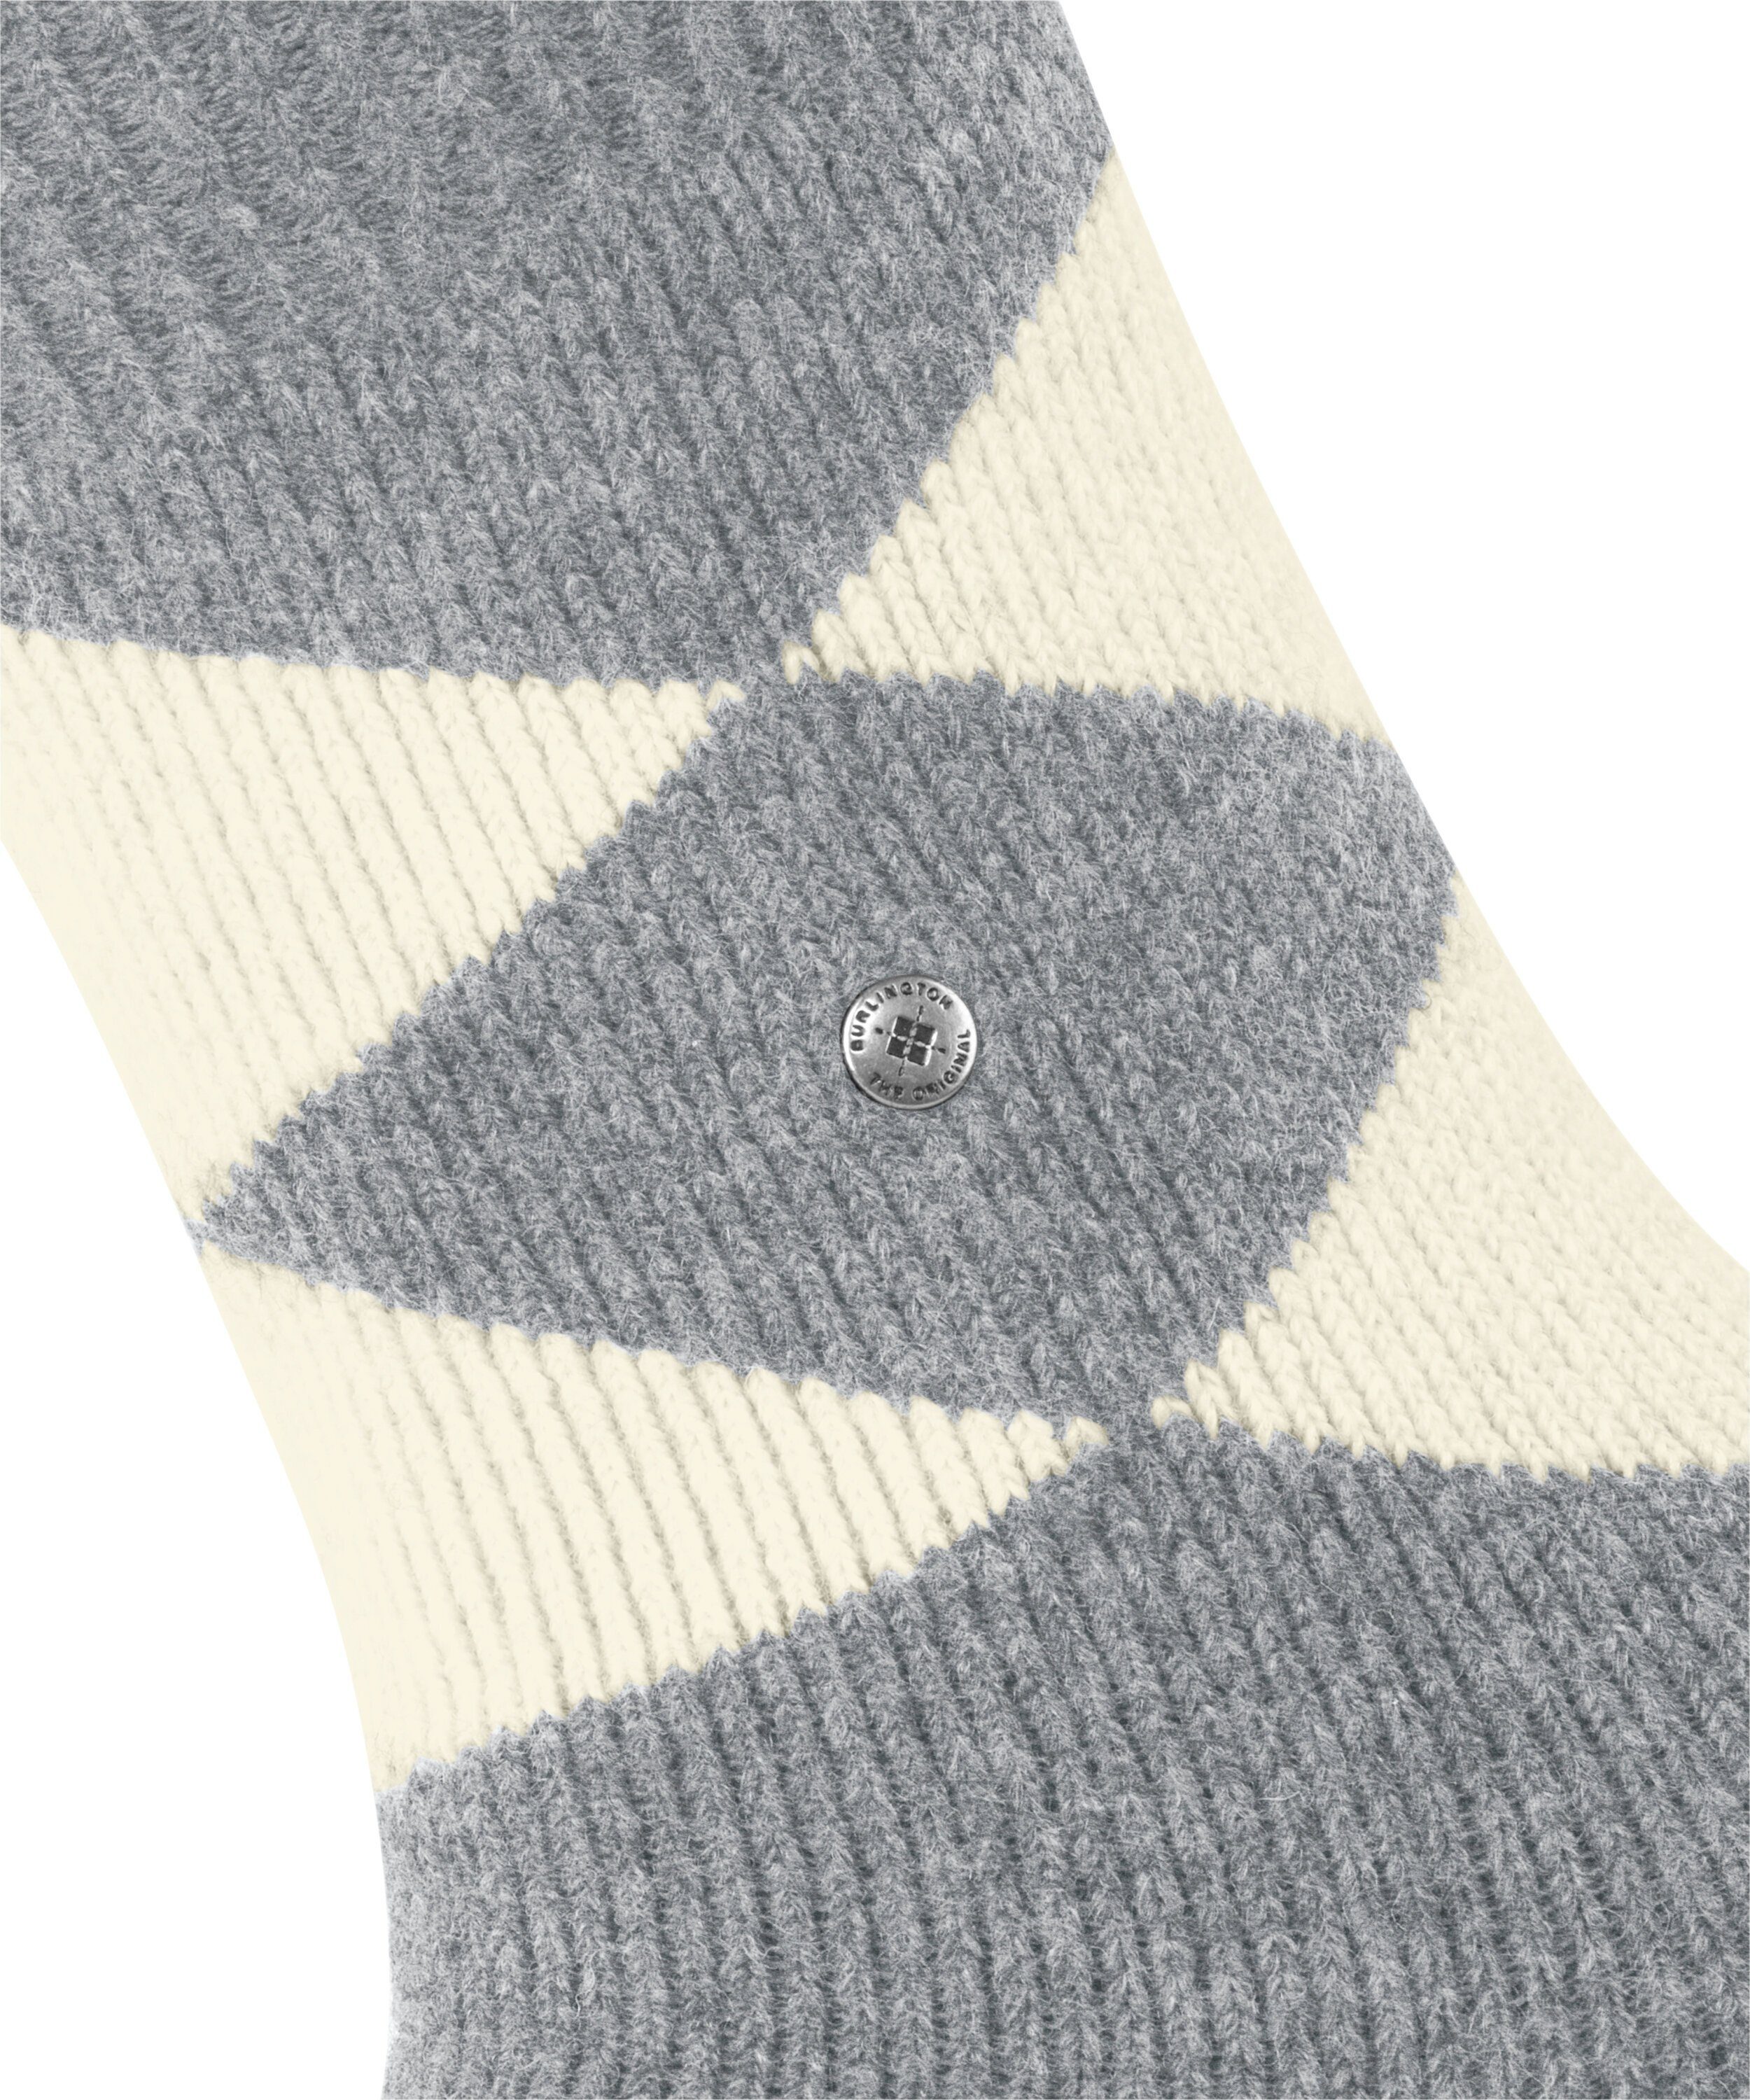 Argyle (3107) Socken (1-Paar) grey Cosy Burlington mel.